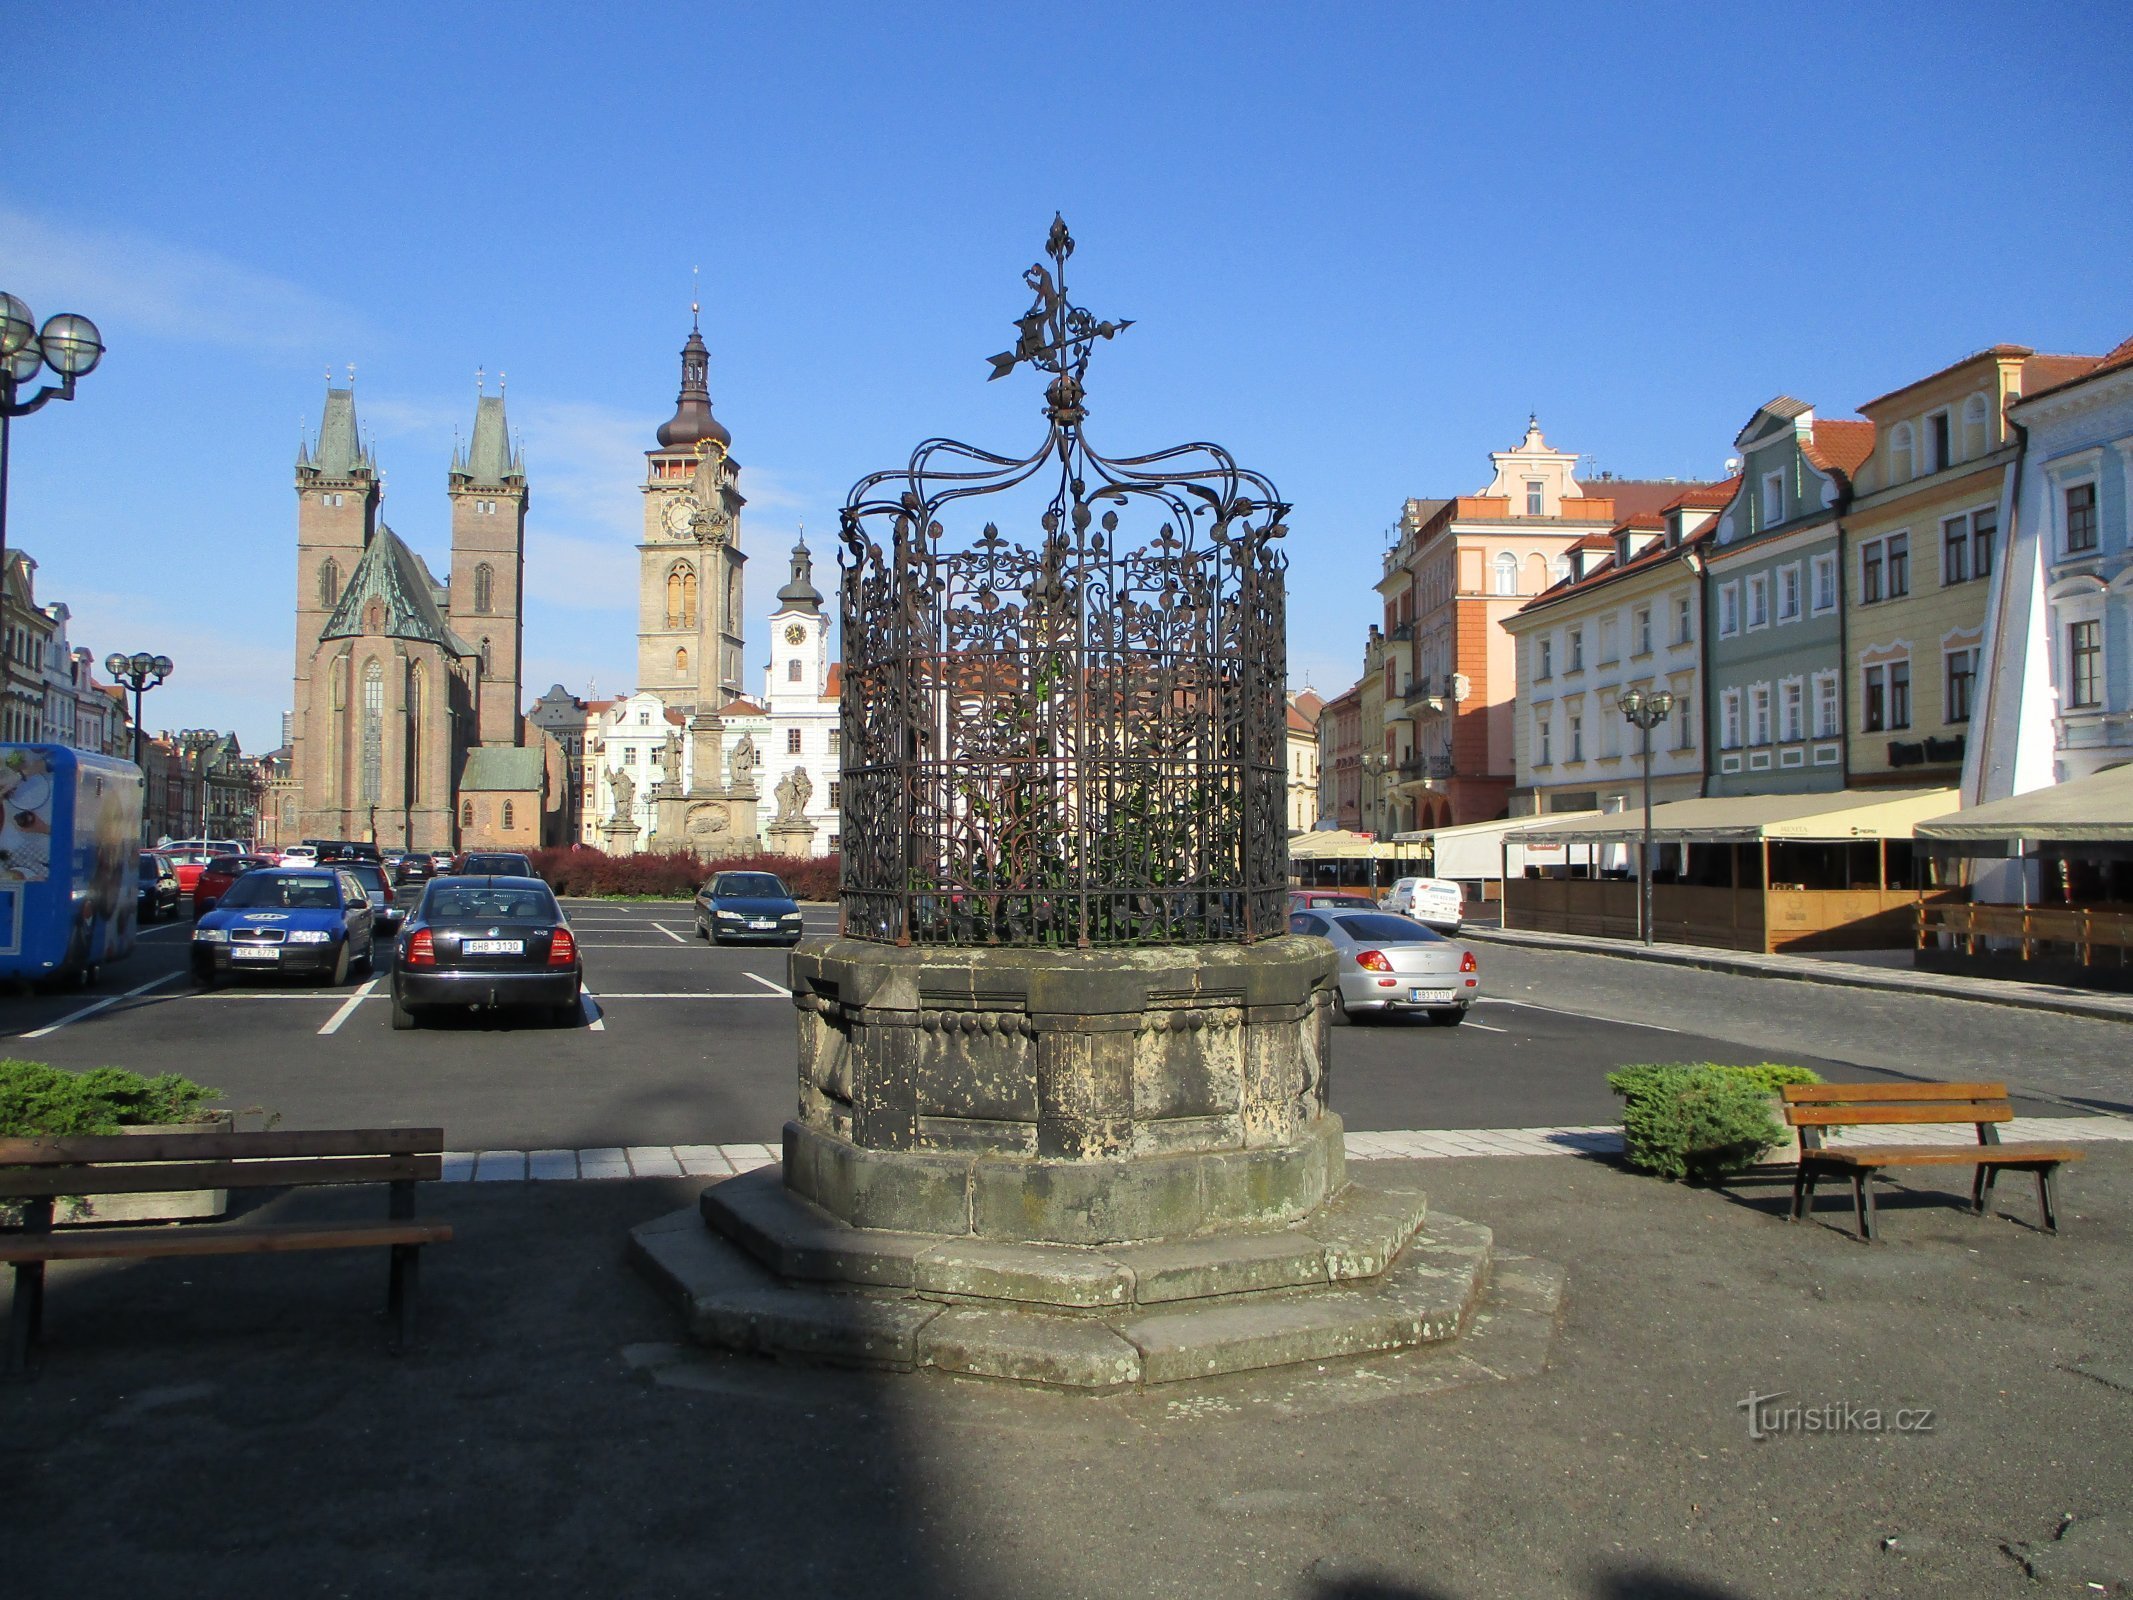 Fountain on the Great Square (Hradec Králové, 6.7.2019/XNUMX/XNUMX)